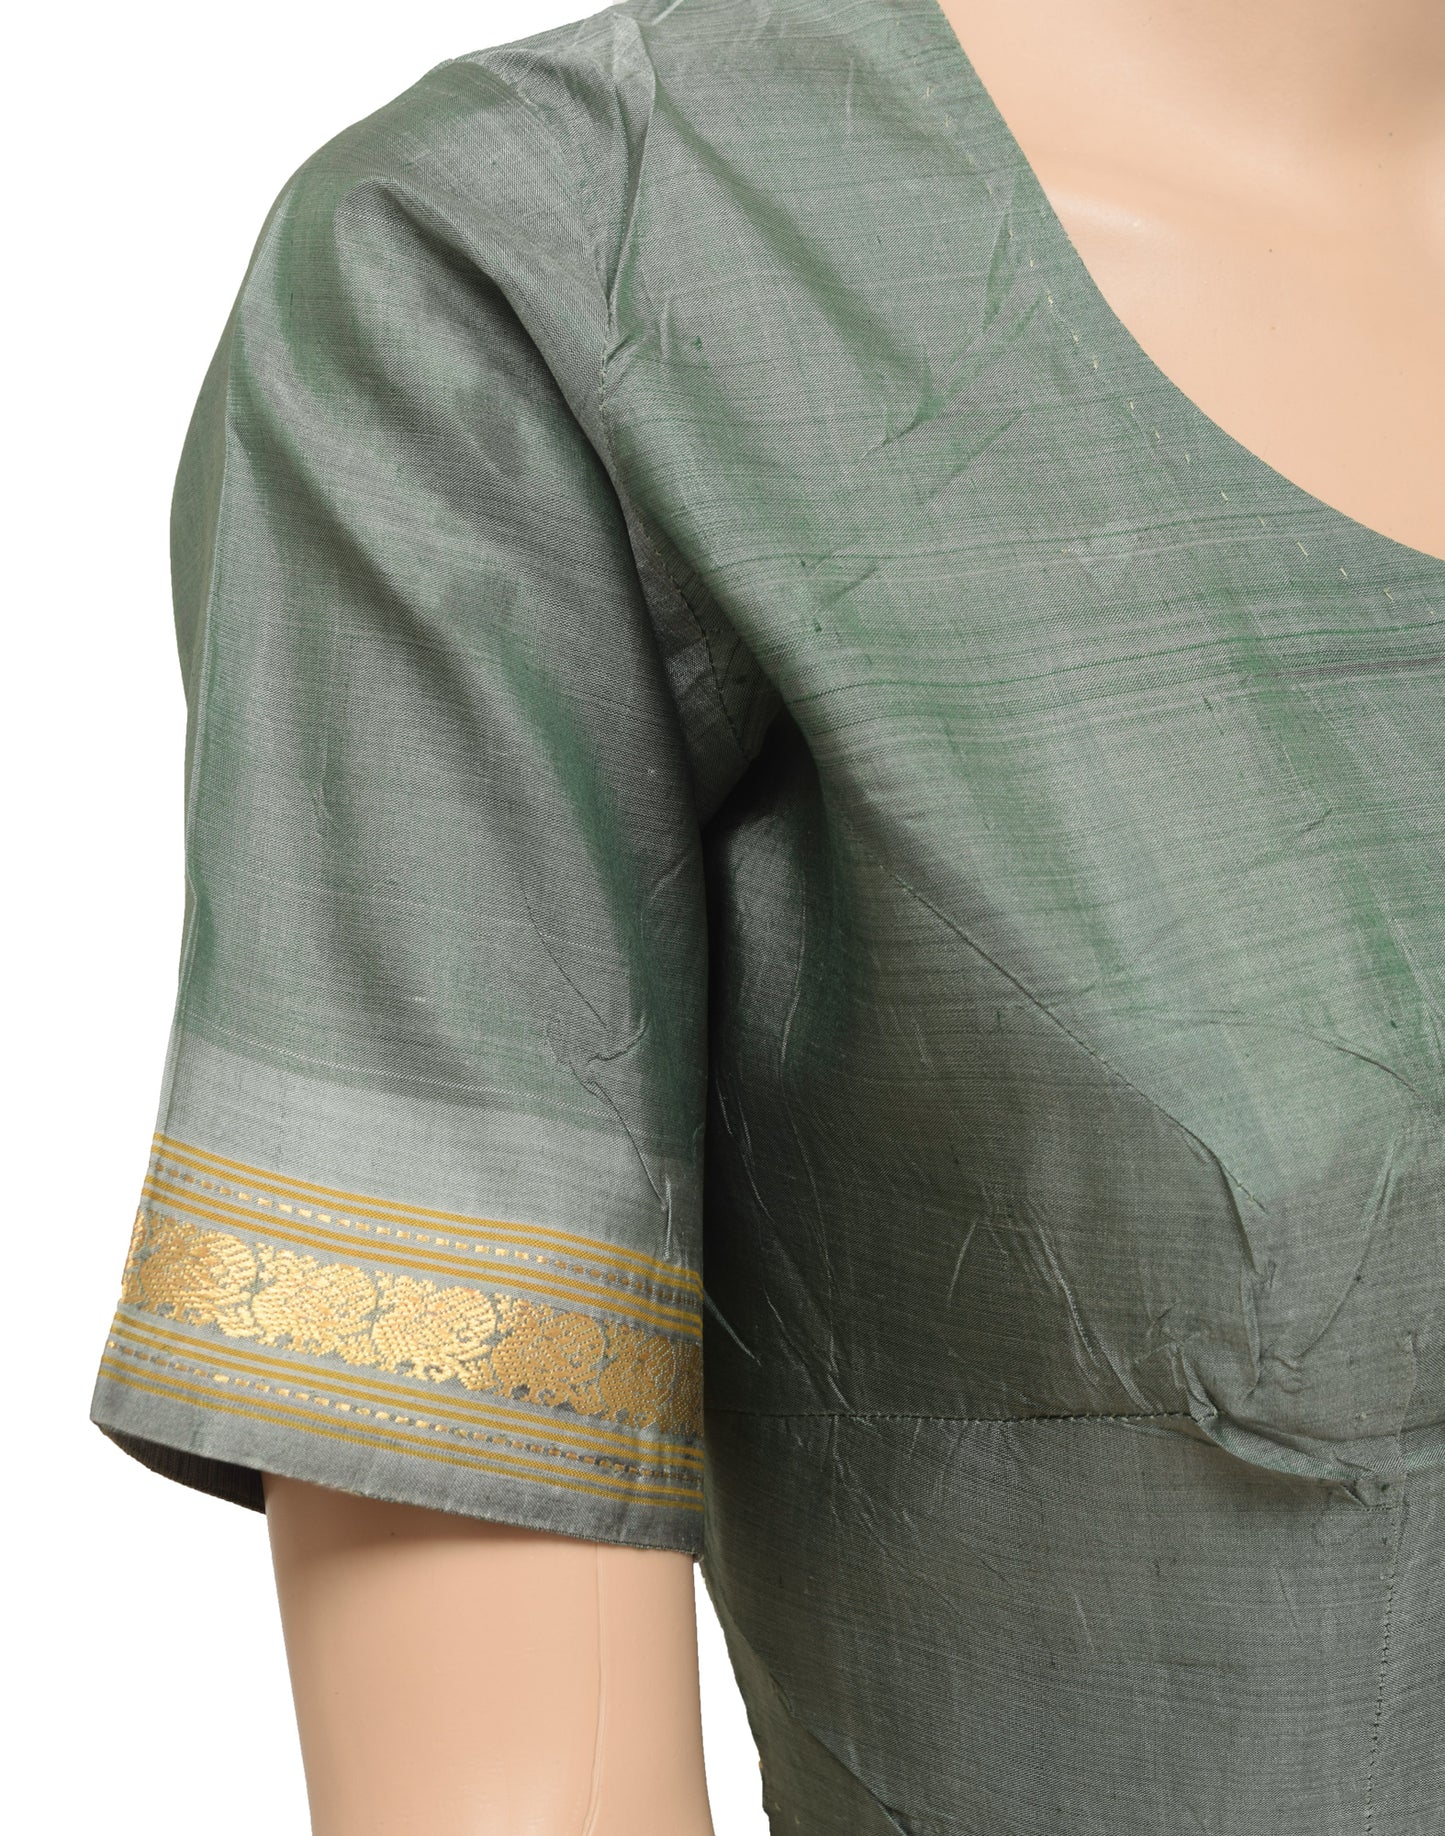 Sushila Vintage Stitched Sari Blouse Gray Pure Silk Woven Designer Women's Choli